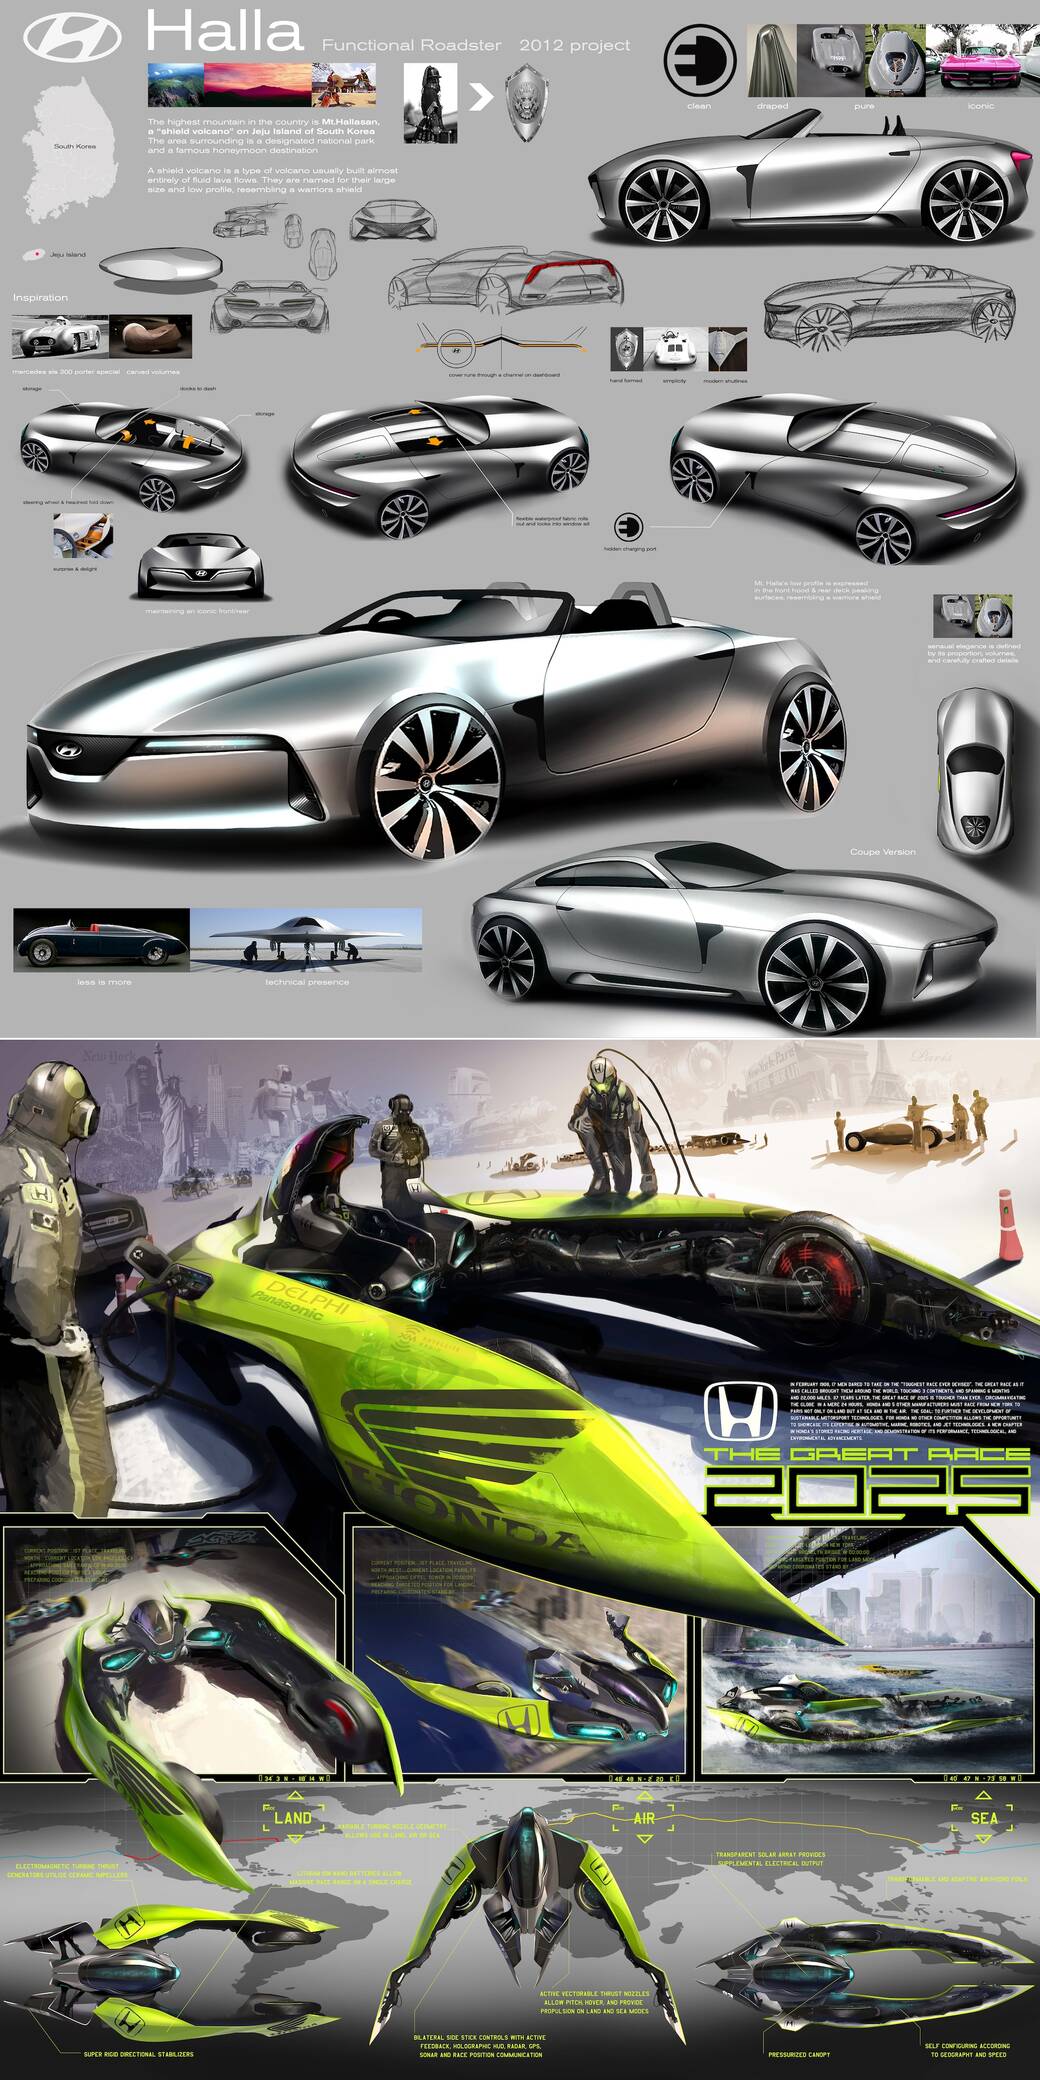 Concept design work for Hyundai and Honda by alum Franco Corral.